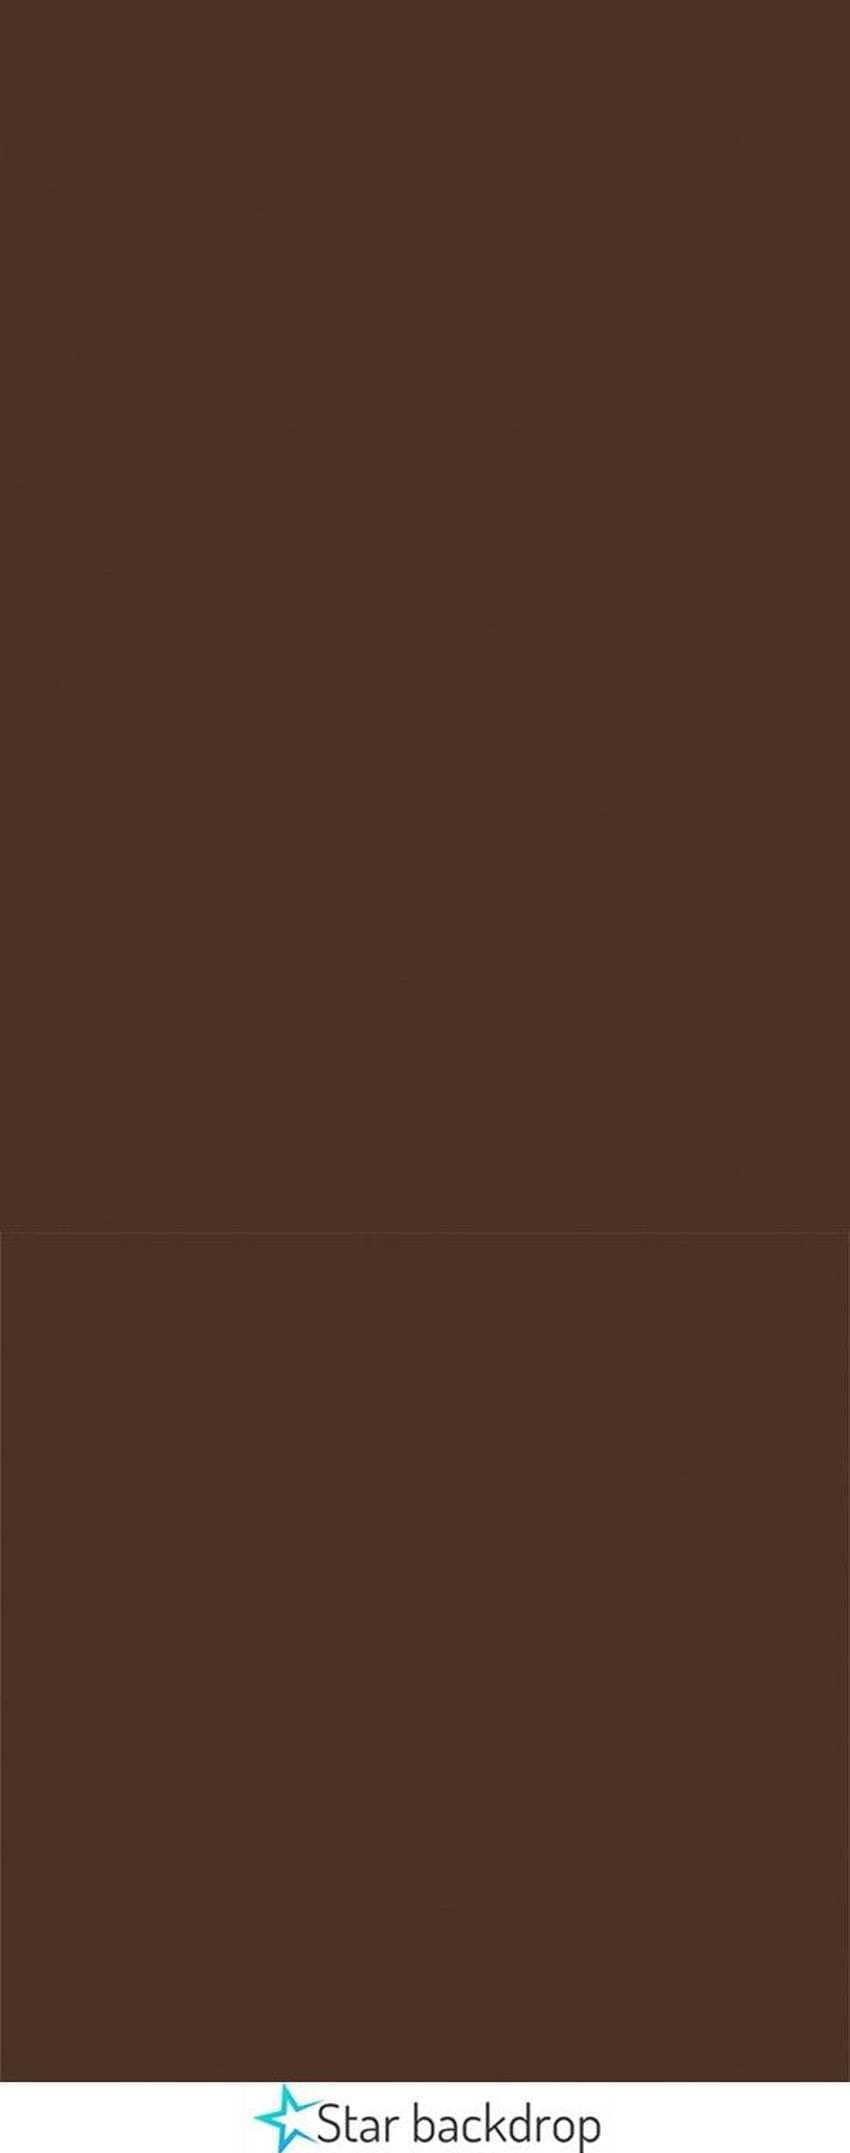 Dark Brown Coffee Color Solid Backdrops HD phone wallpaper